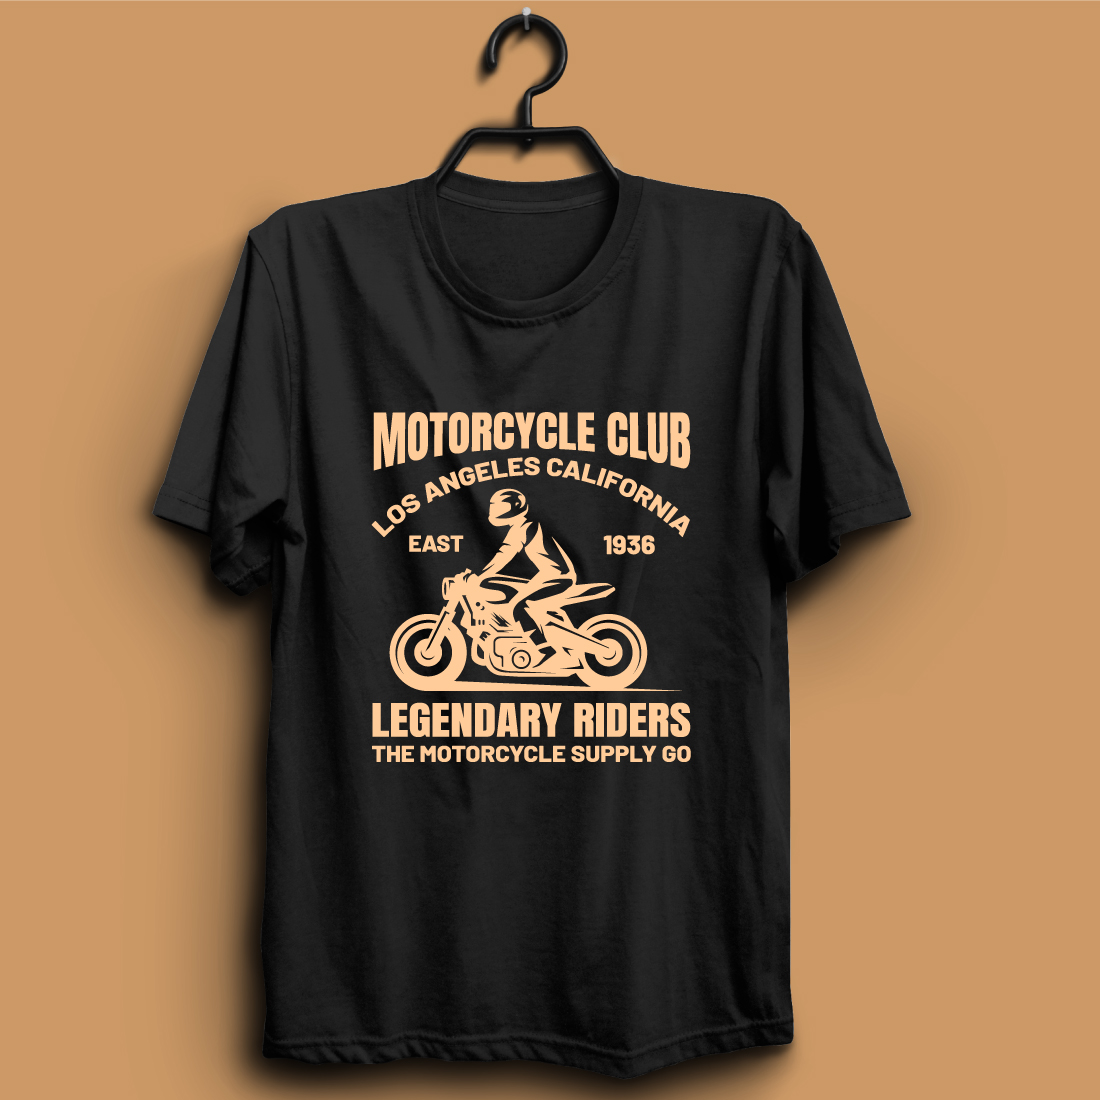 vintage motorcycle t shirt design01 859